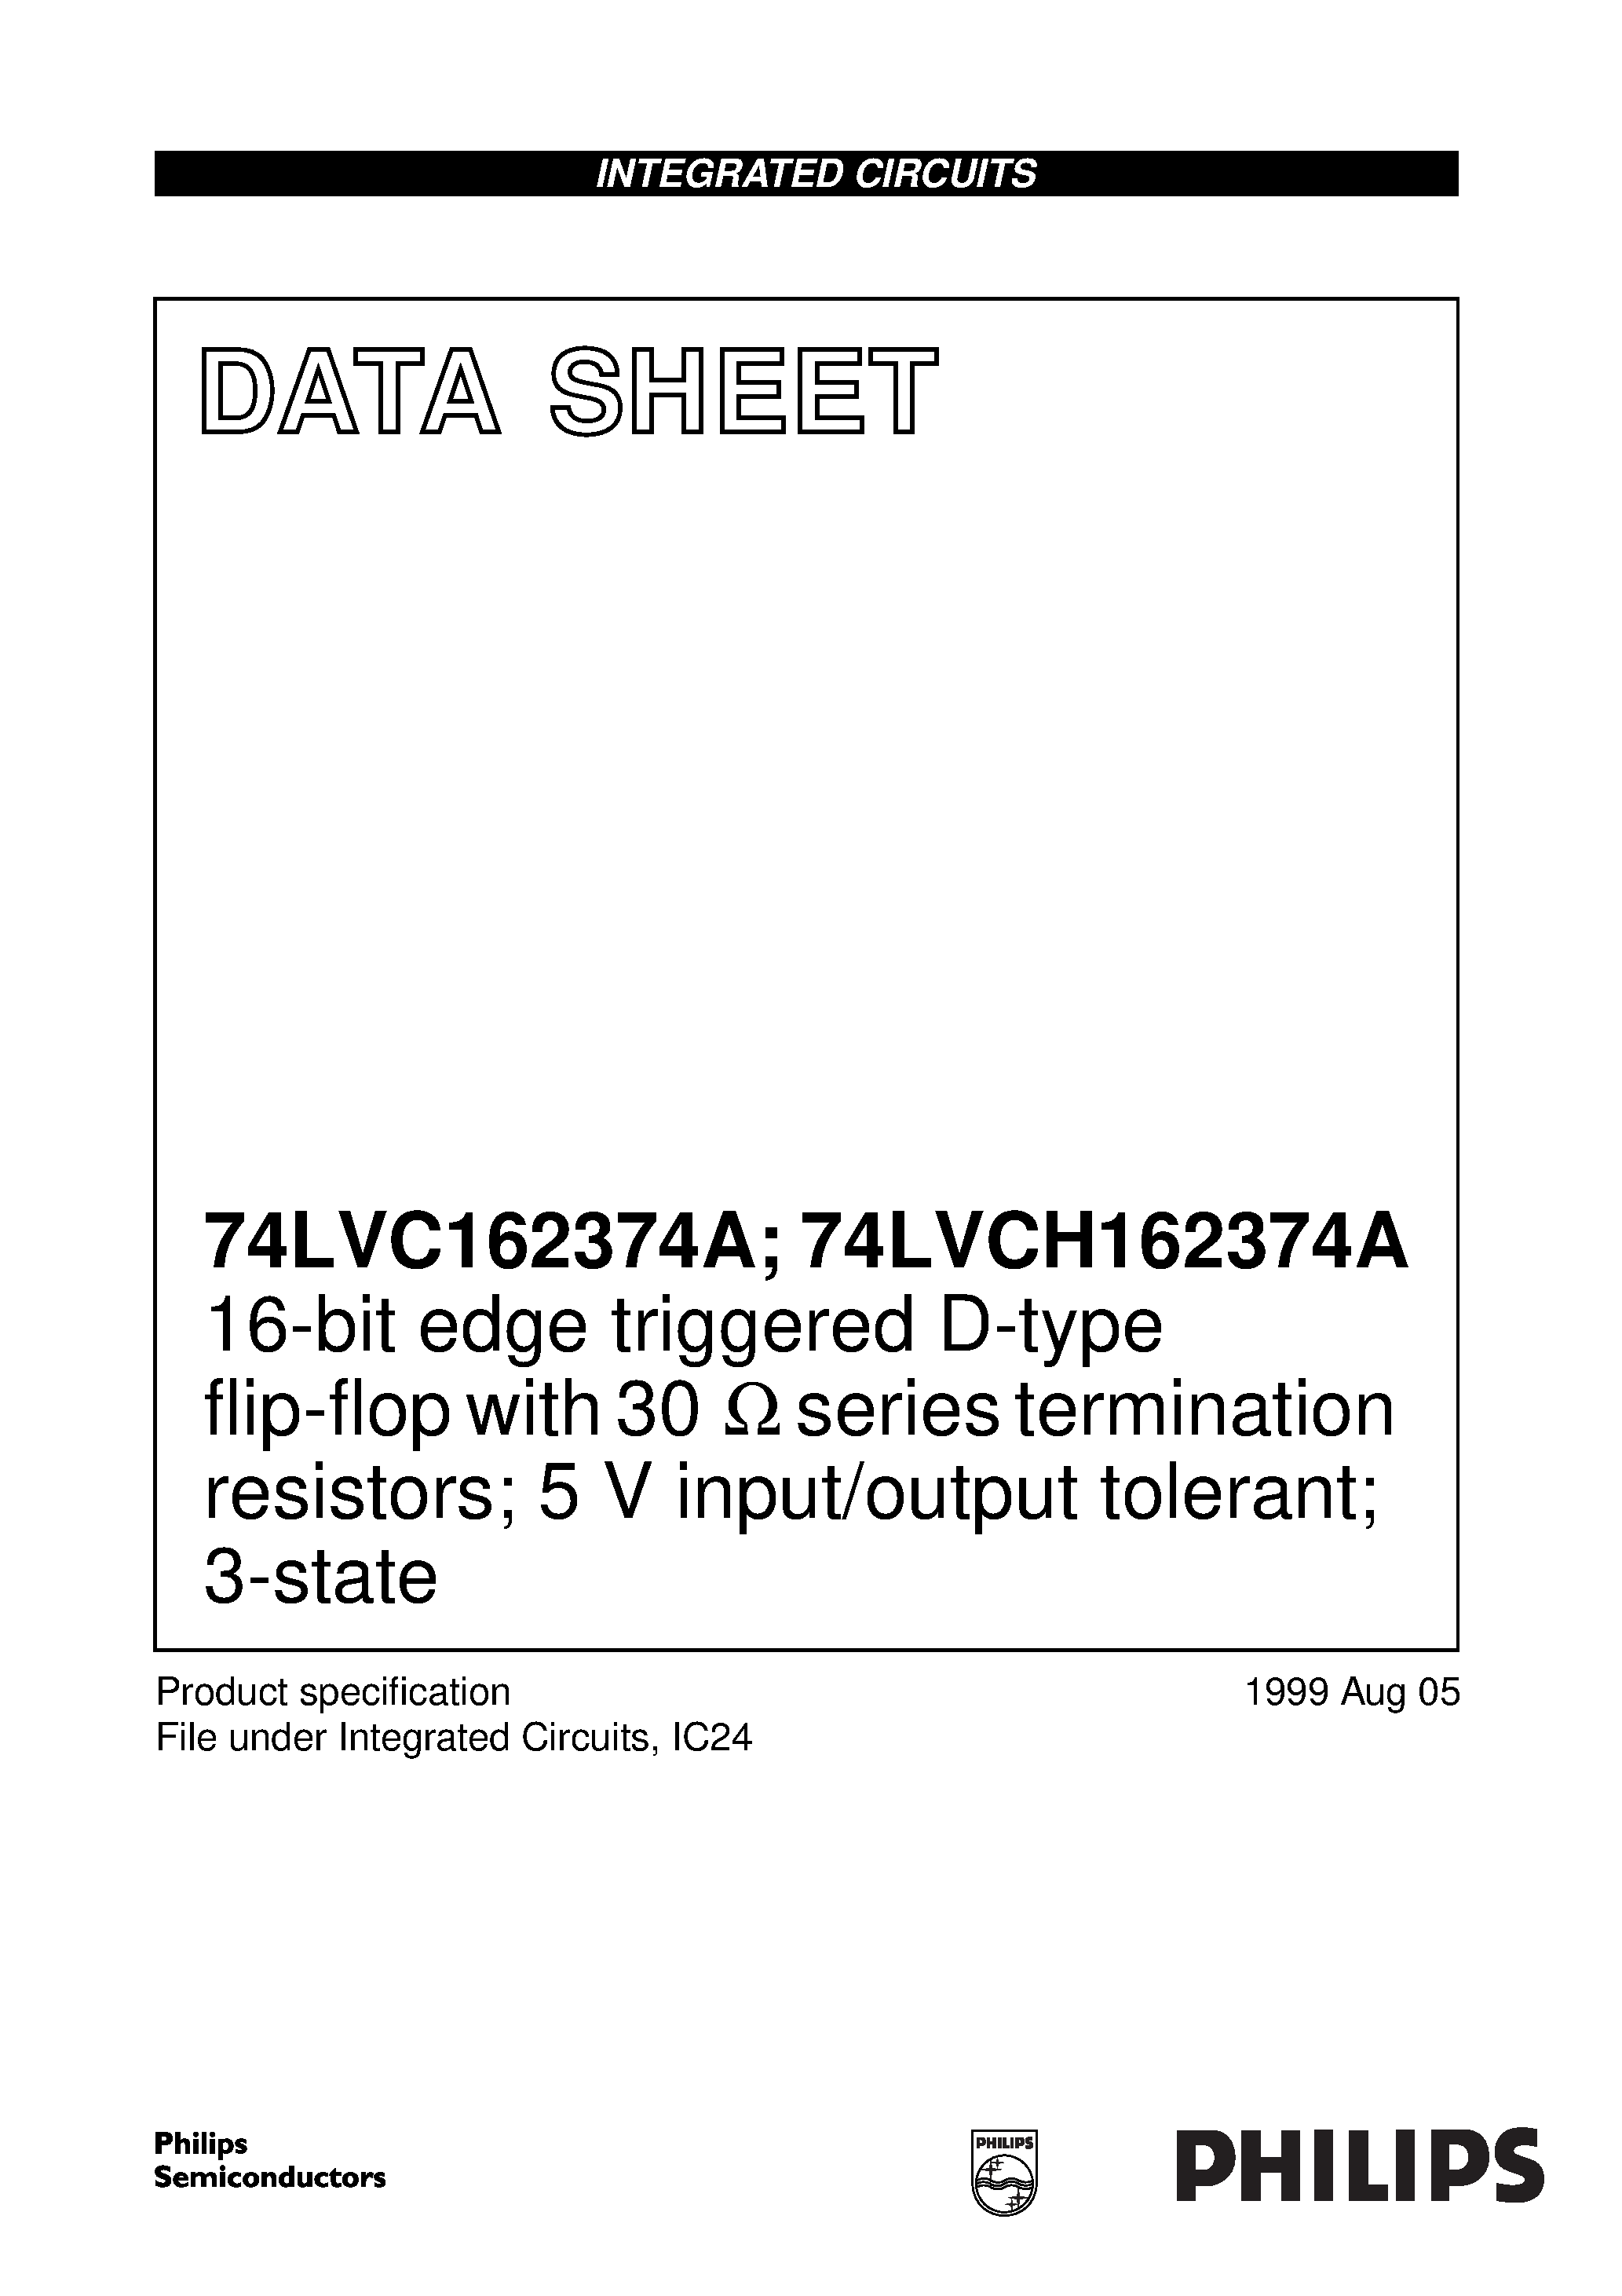 Даташит VC162374ADL - 16-bit edge triggered D-type flip-flop with 30 ohmseries termination resistors; 5 V input/output tolerant; 3-state страница 1